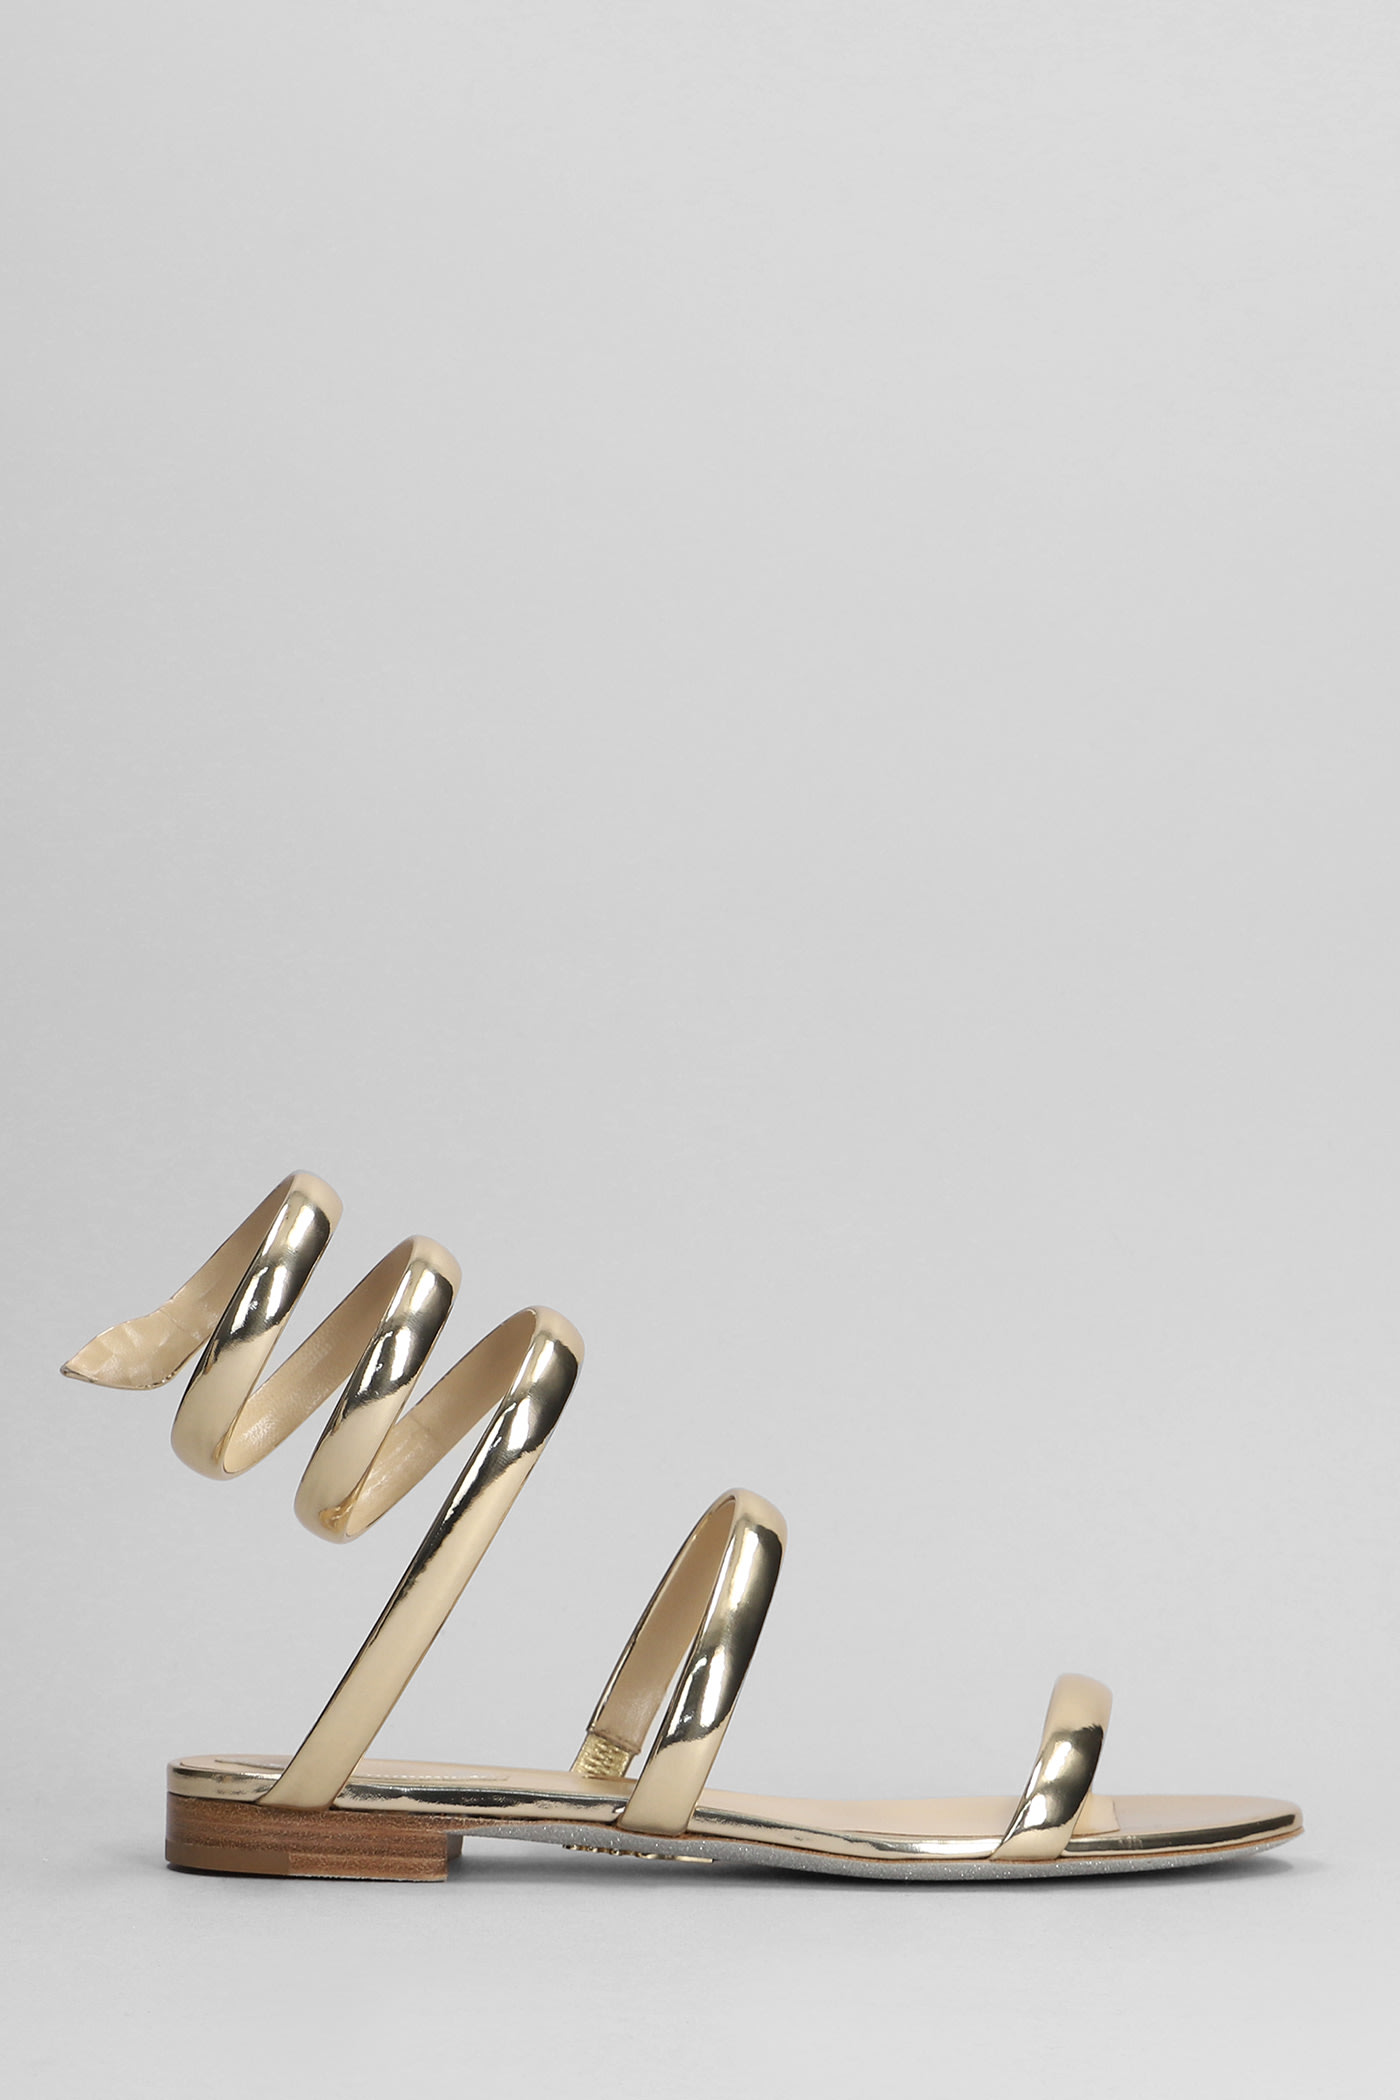 René Caovilla Serpente Sandals In Gold Leather